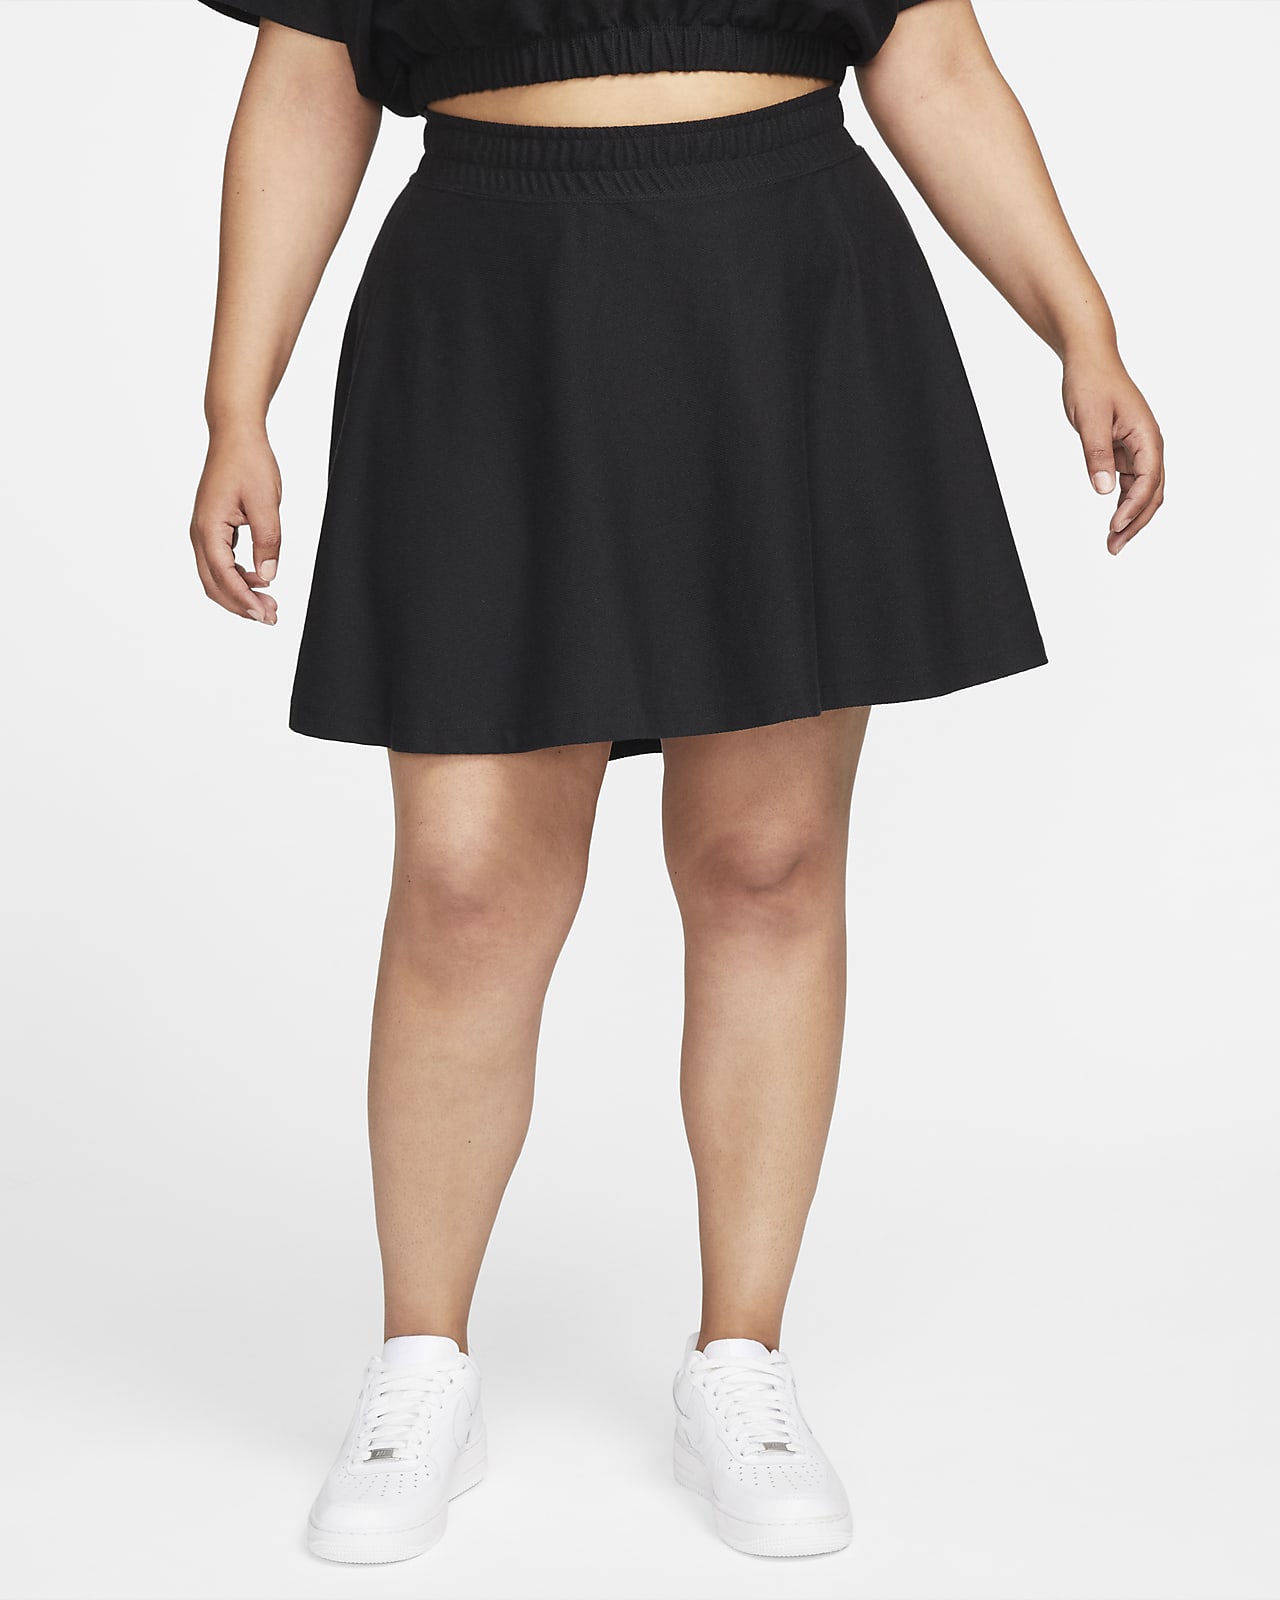 Nike Air Women's Pique Skirt (Plus Size)